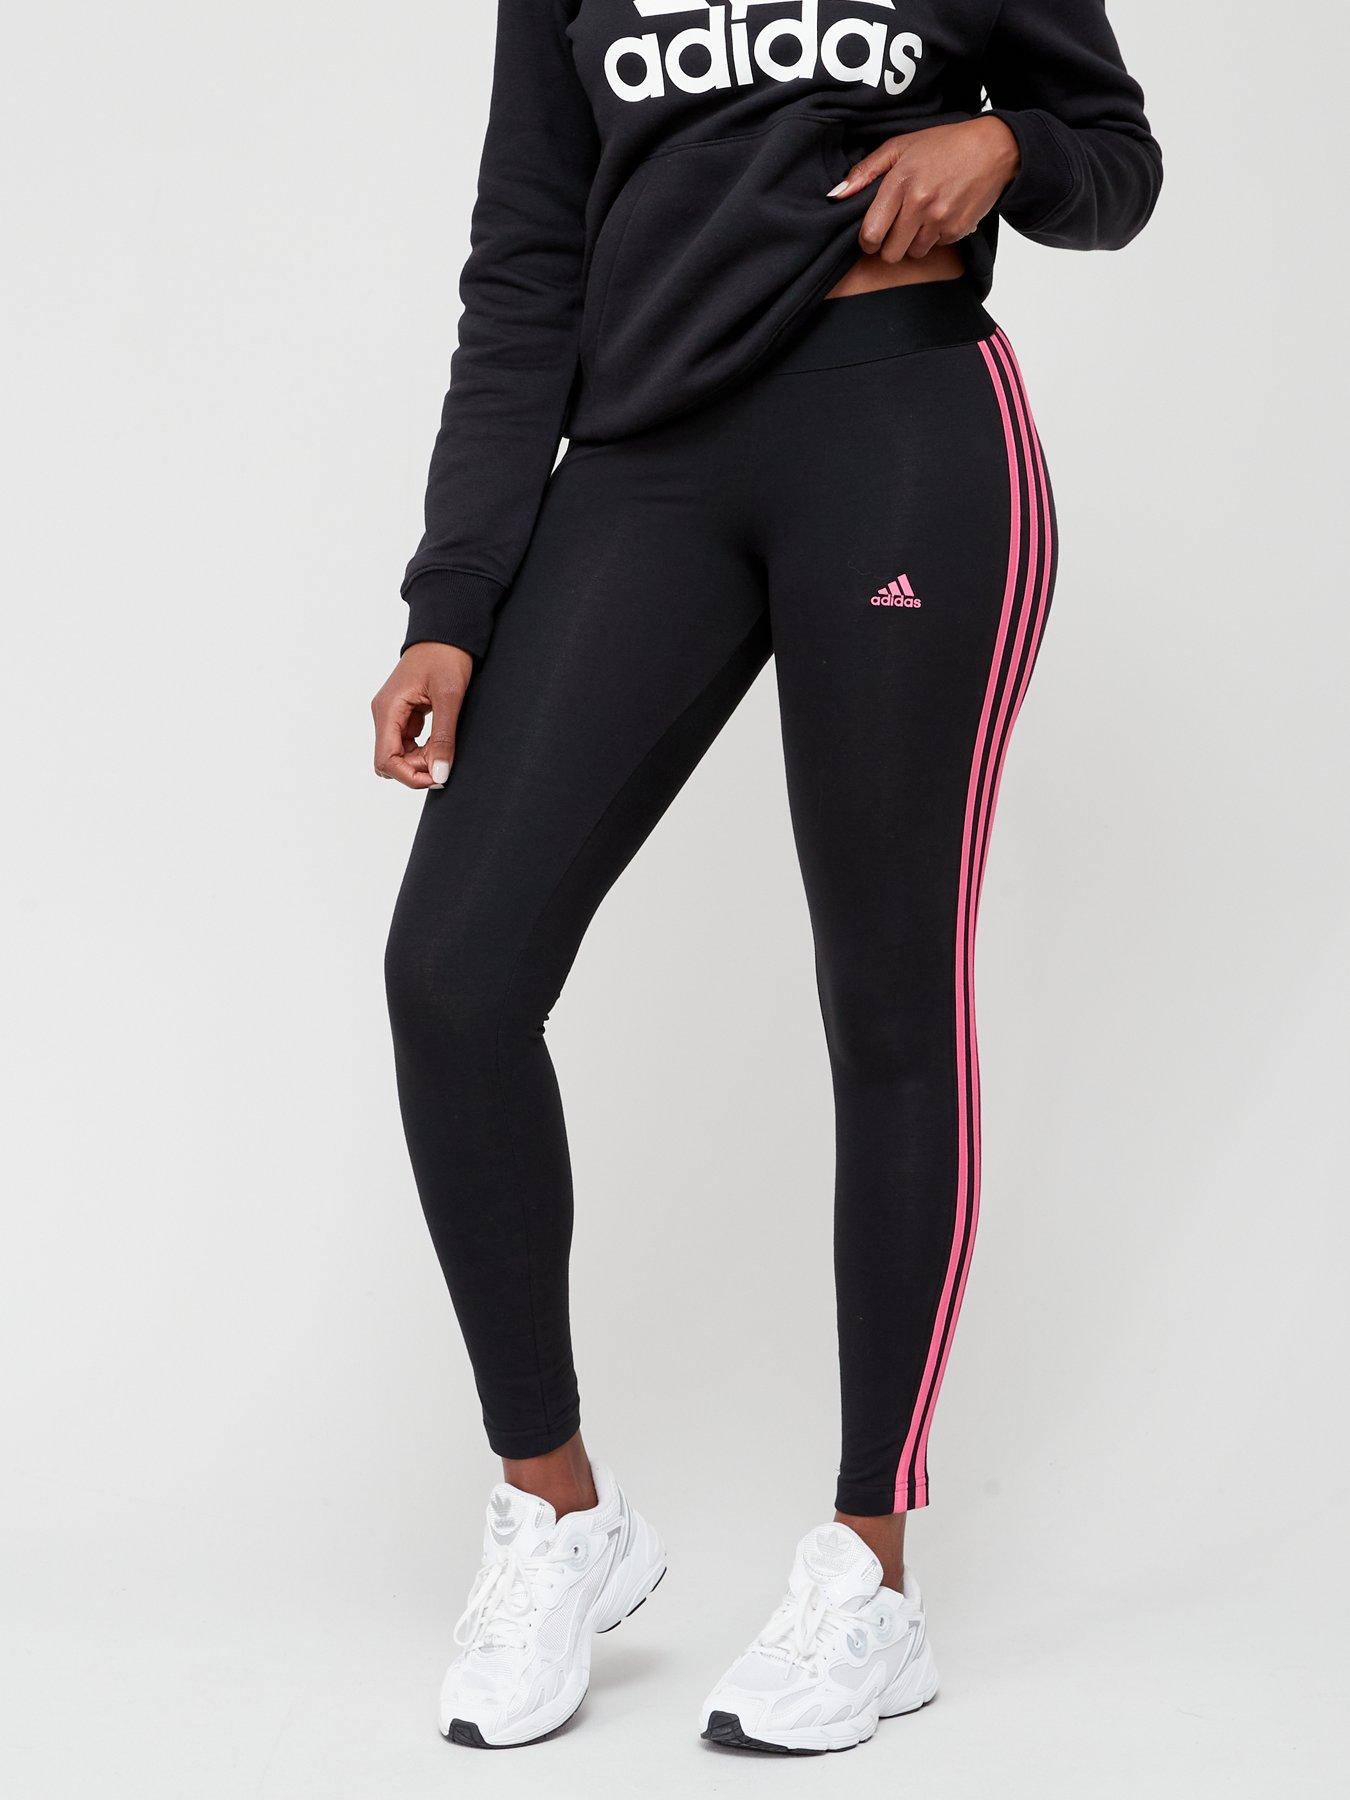 https://media.littlewoods.com/i/littlewoods/V3LAC_SQ1_0000000156_BLACK_PINK_MDf/adidas-sportswear-womens-3-stripe-leggings-blackpink.jpg?$180x240_retinamobilex2$